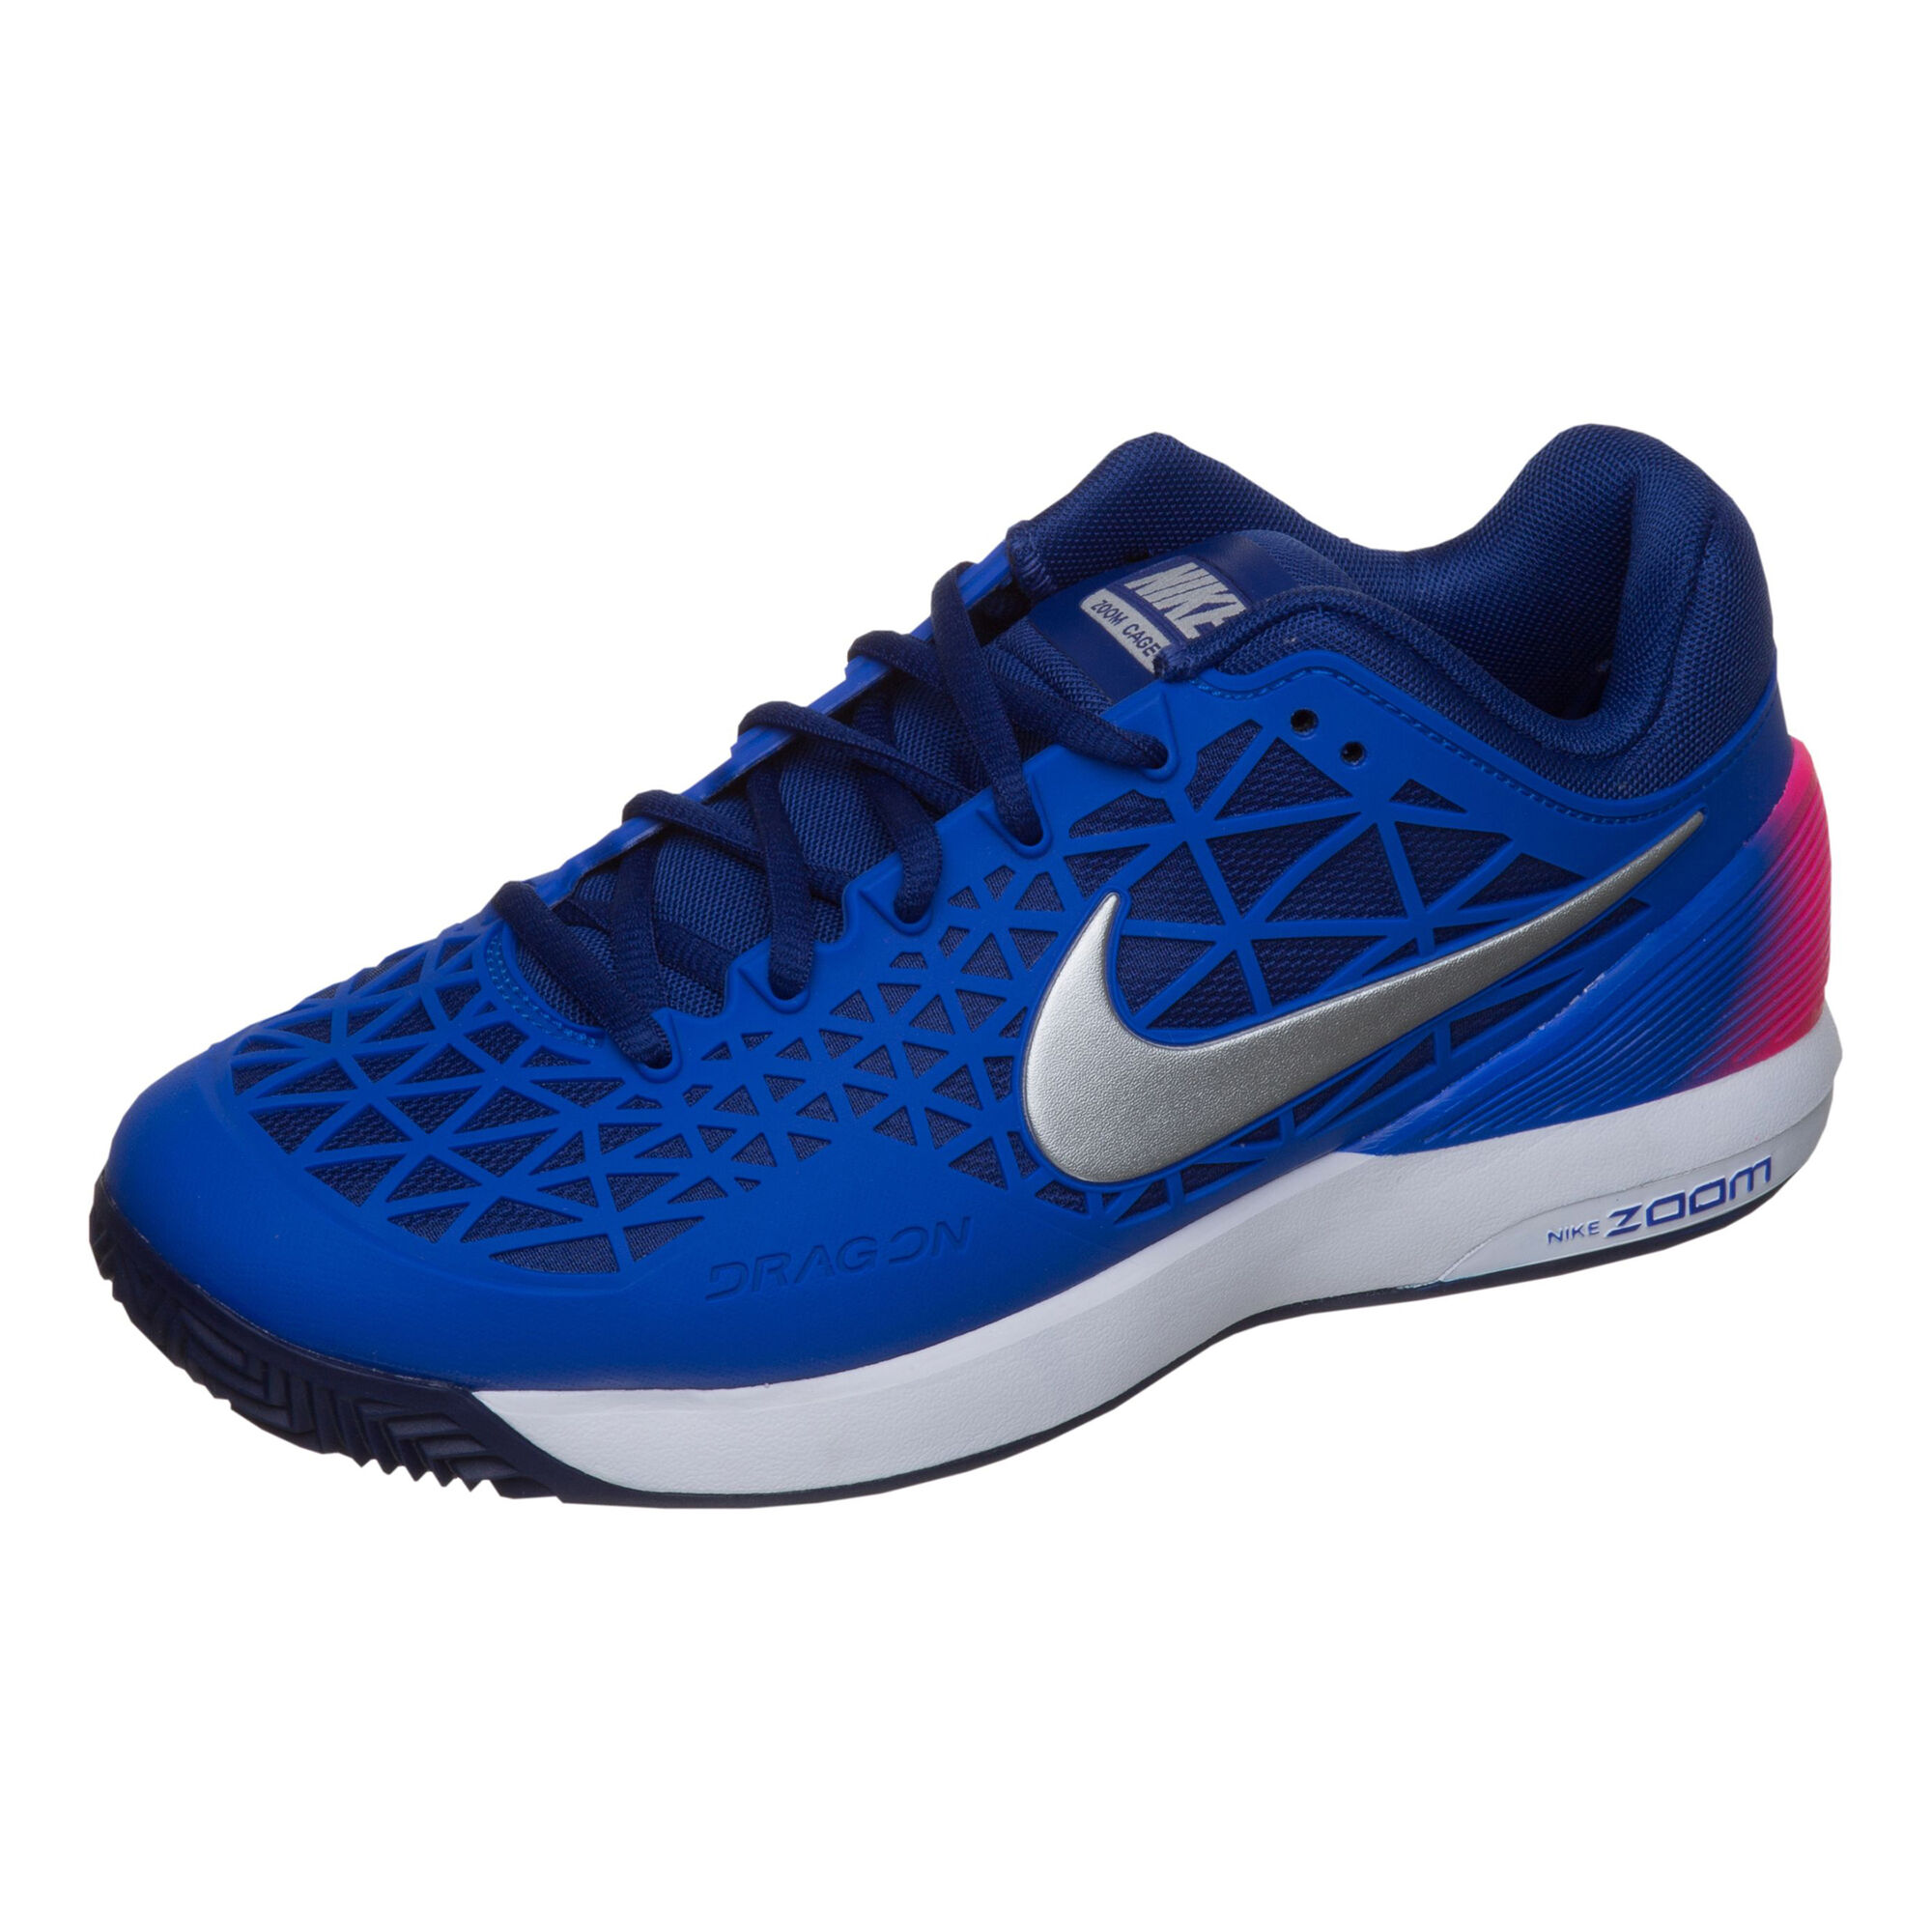 pompa esqueleto Médico buy Nike Zoom Cage 2 Clay Court Shoe Women - Blue, Dark Blue online | Tennis -Point